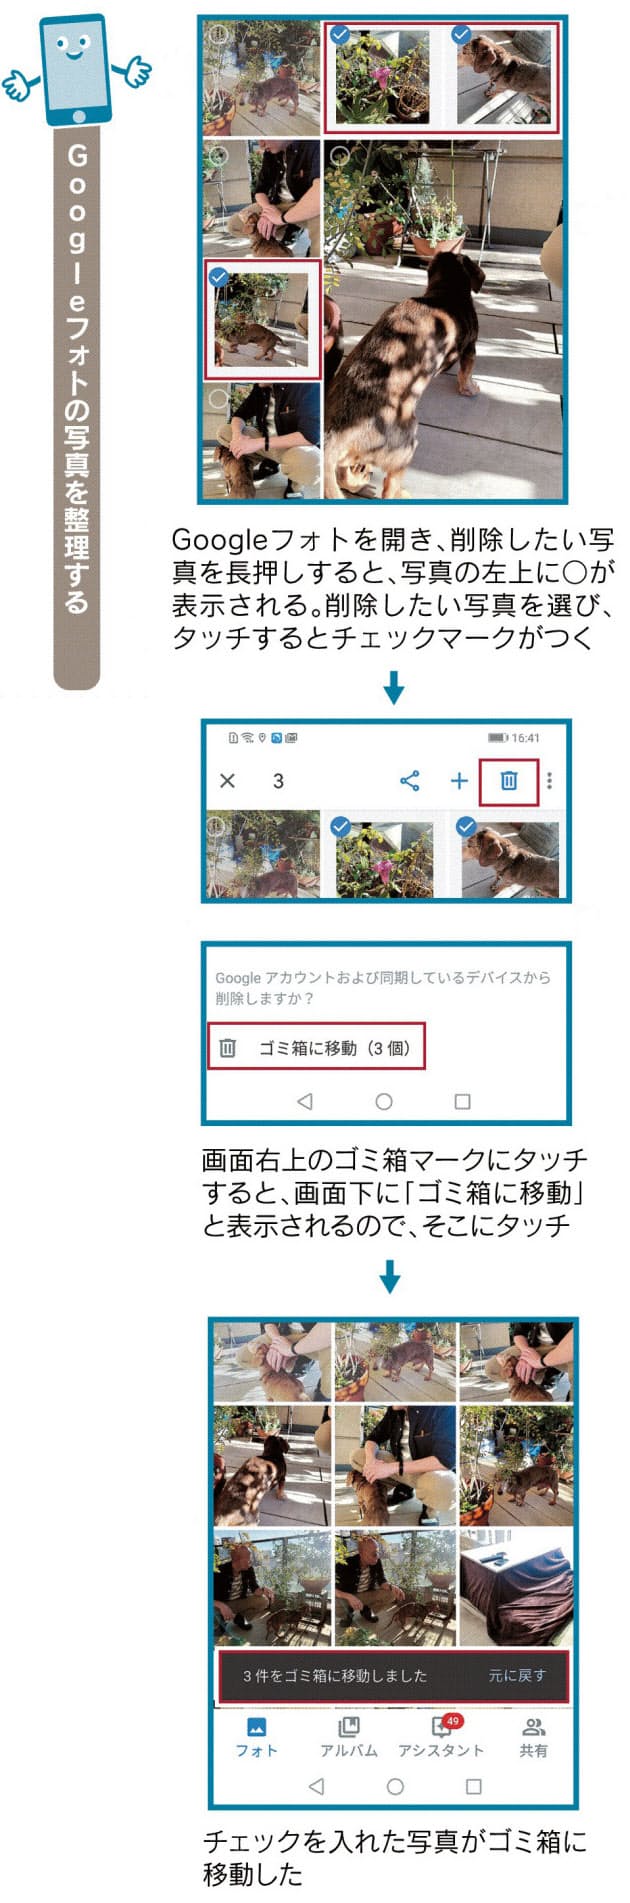 Icloud容量不足どうする 不要データ削除 写真整理 Nikkei Style